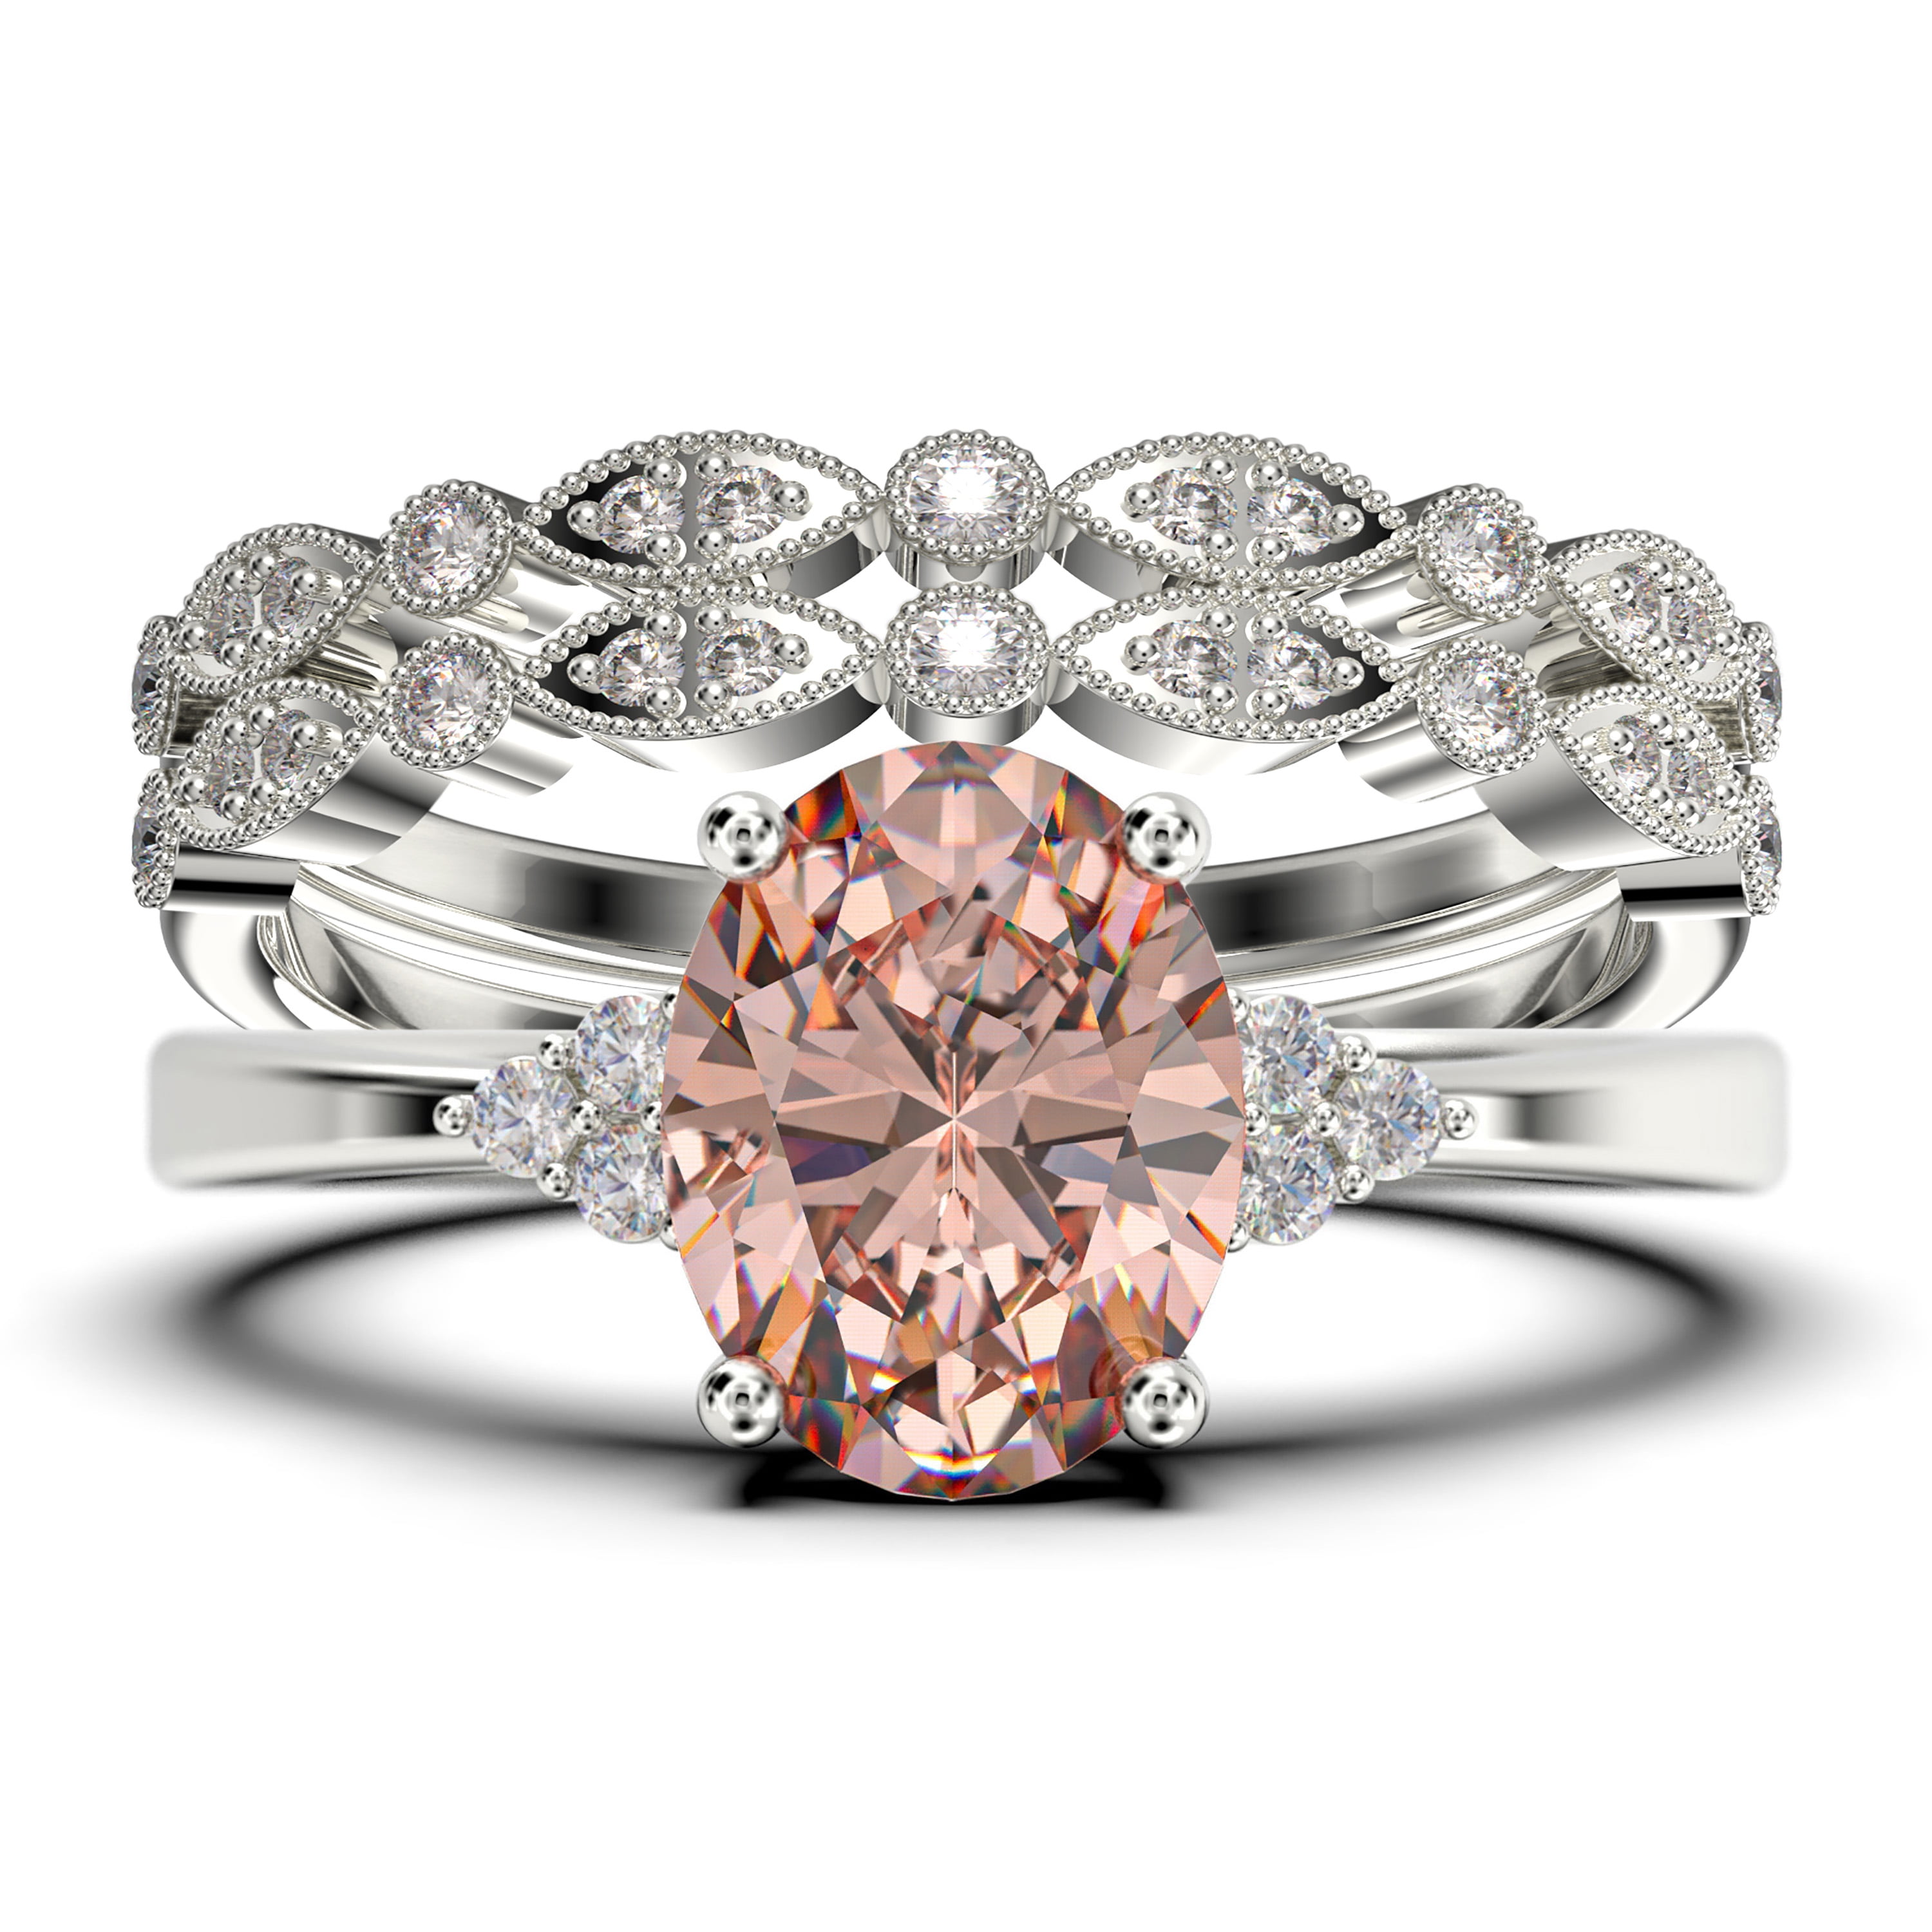 Unique Shank Wedding Ring Gorgeous Engagement Ring 14K White Gold 2.68Ct Diamond 